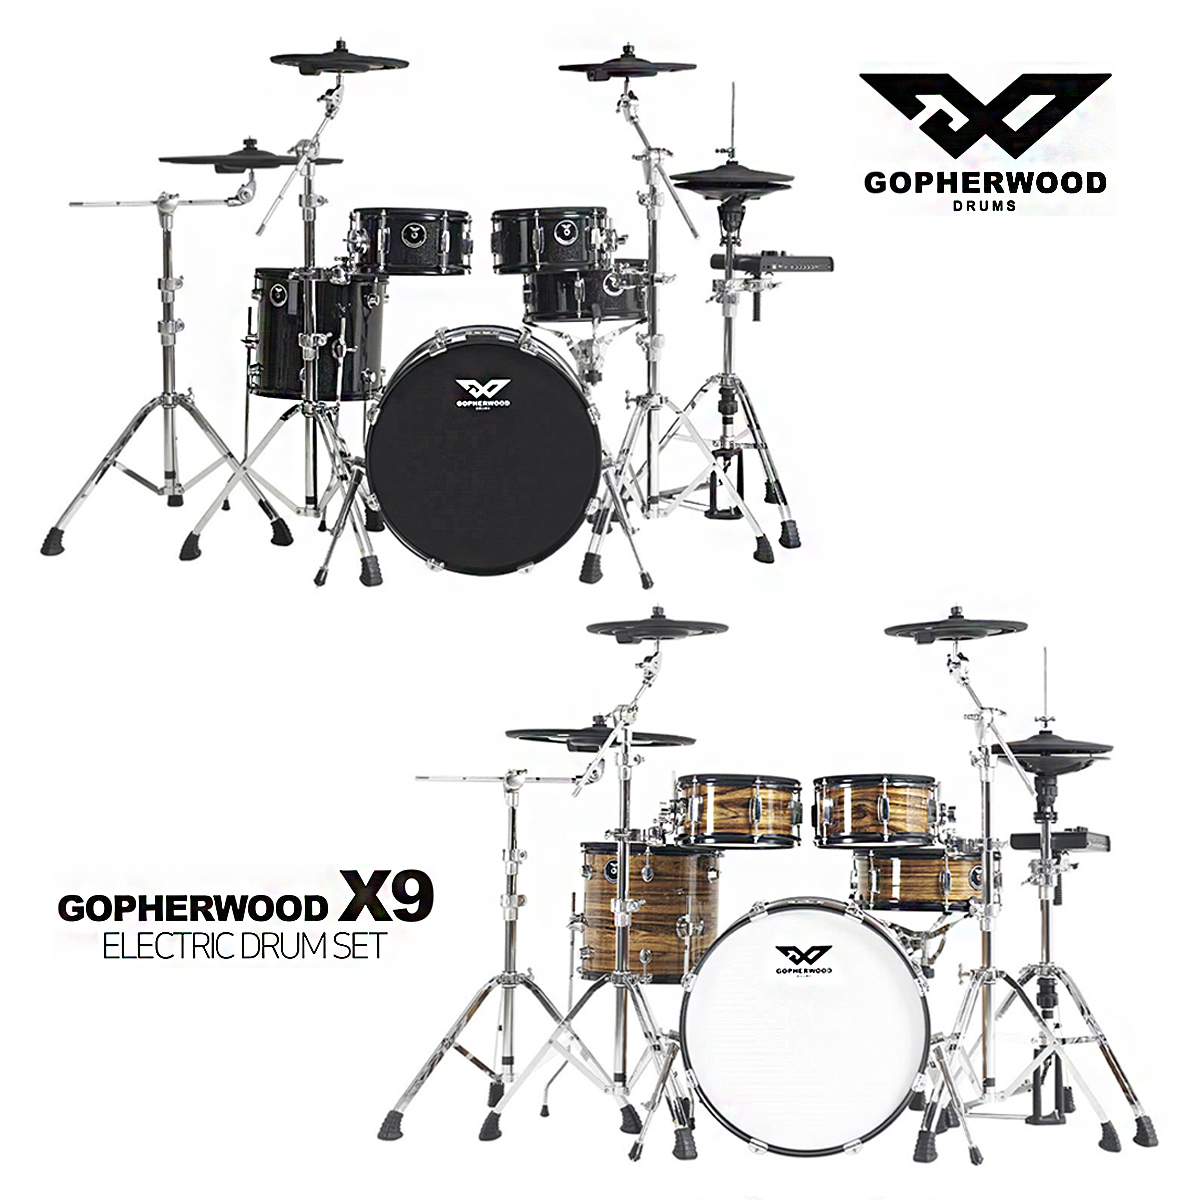 Gopherwood X9 고퍼우드 전자드럼 멀티센서심벌 블루투스기능 풀패키지(드럼의자, 드럼페달, 드럼스틱 포함)